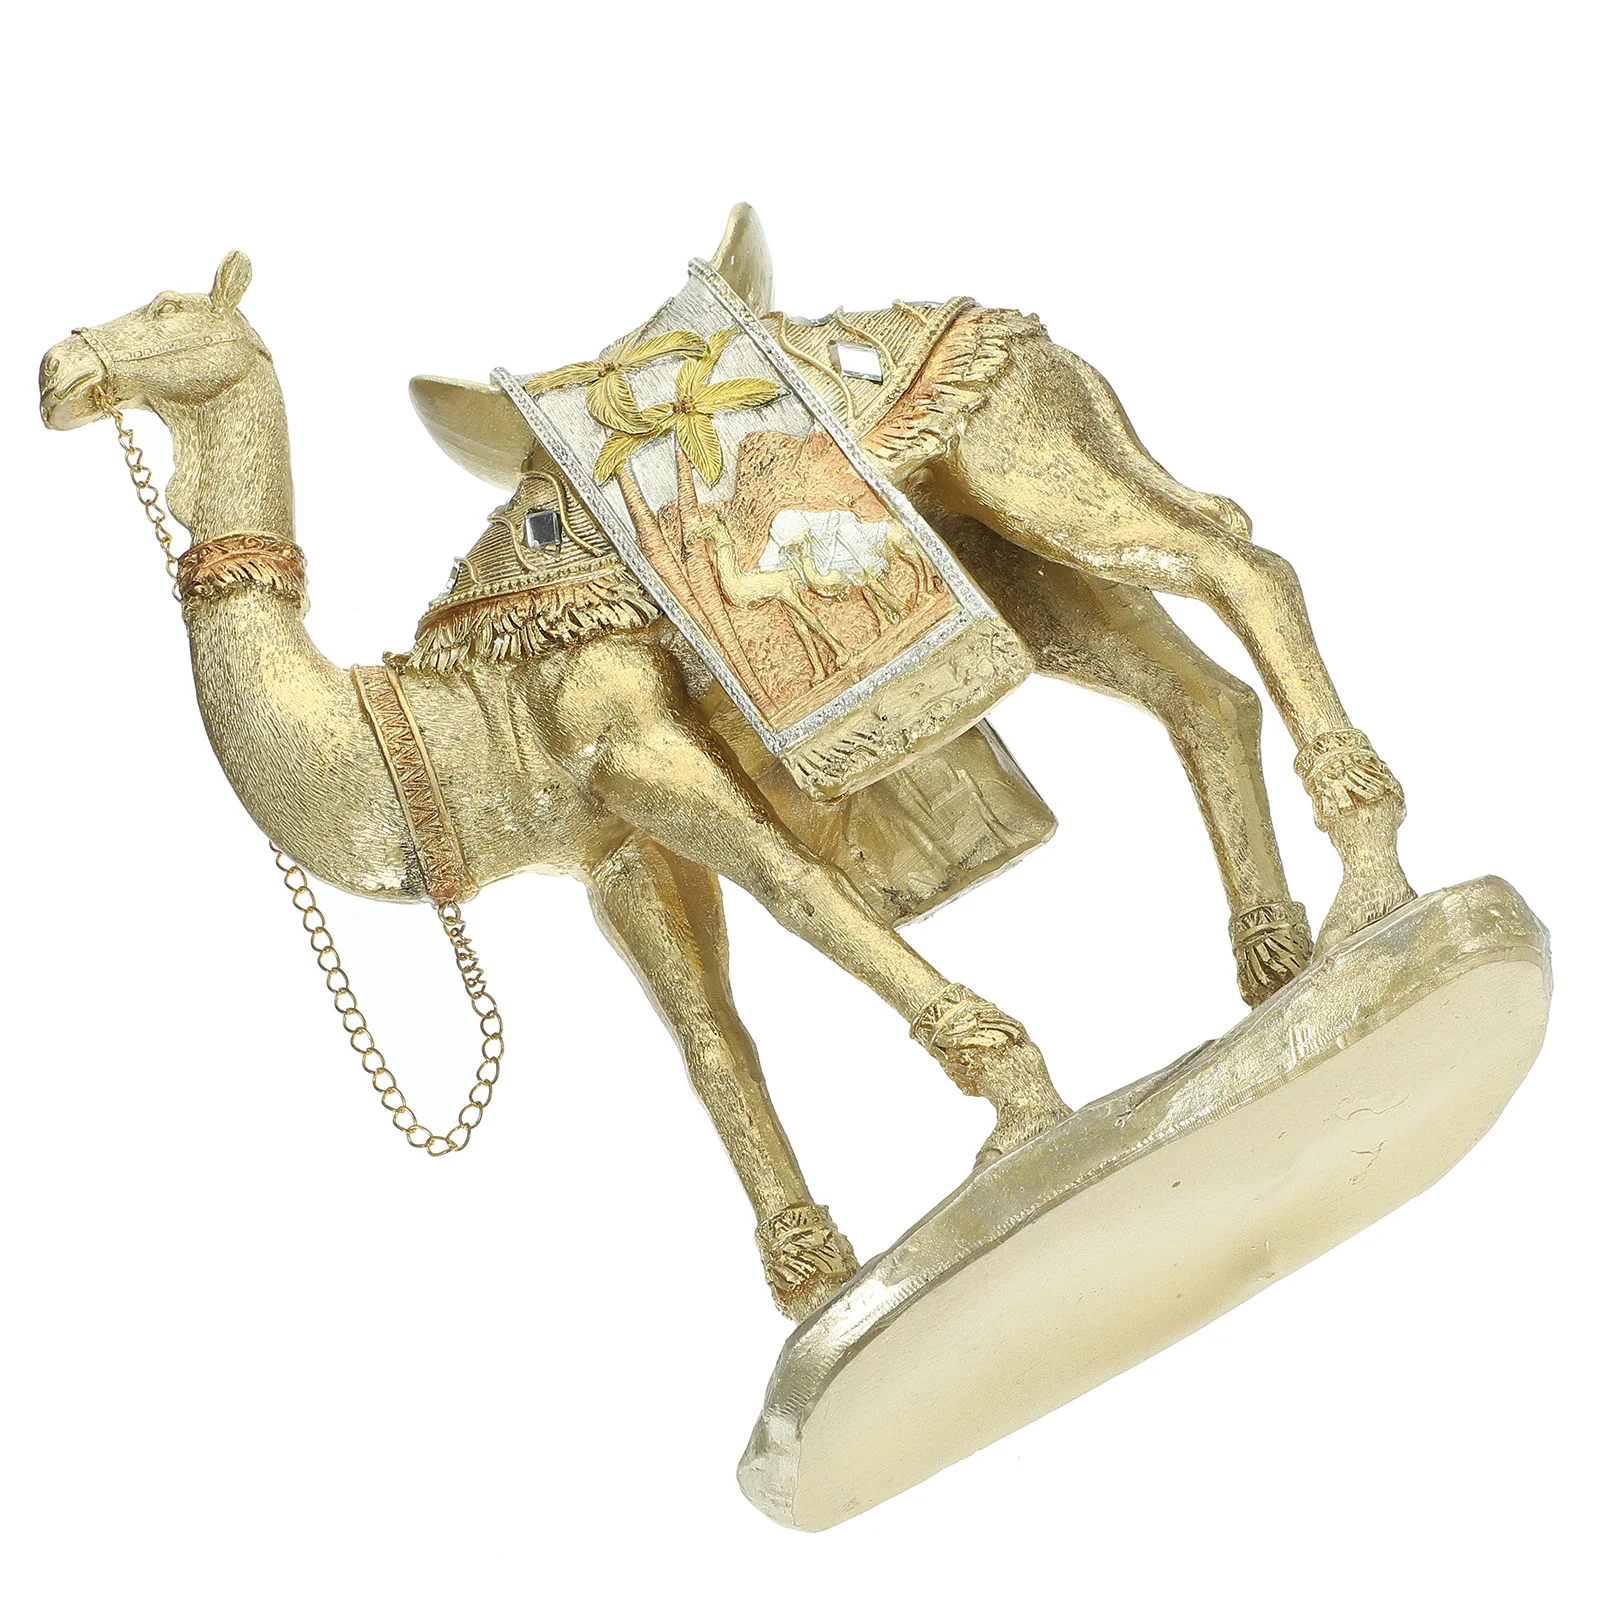 

Camel Sculpture Middle East Camel Resin Ornament Camel Statue for Office